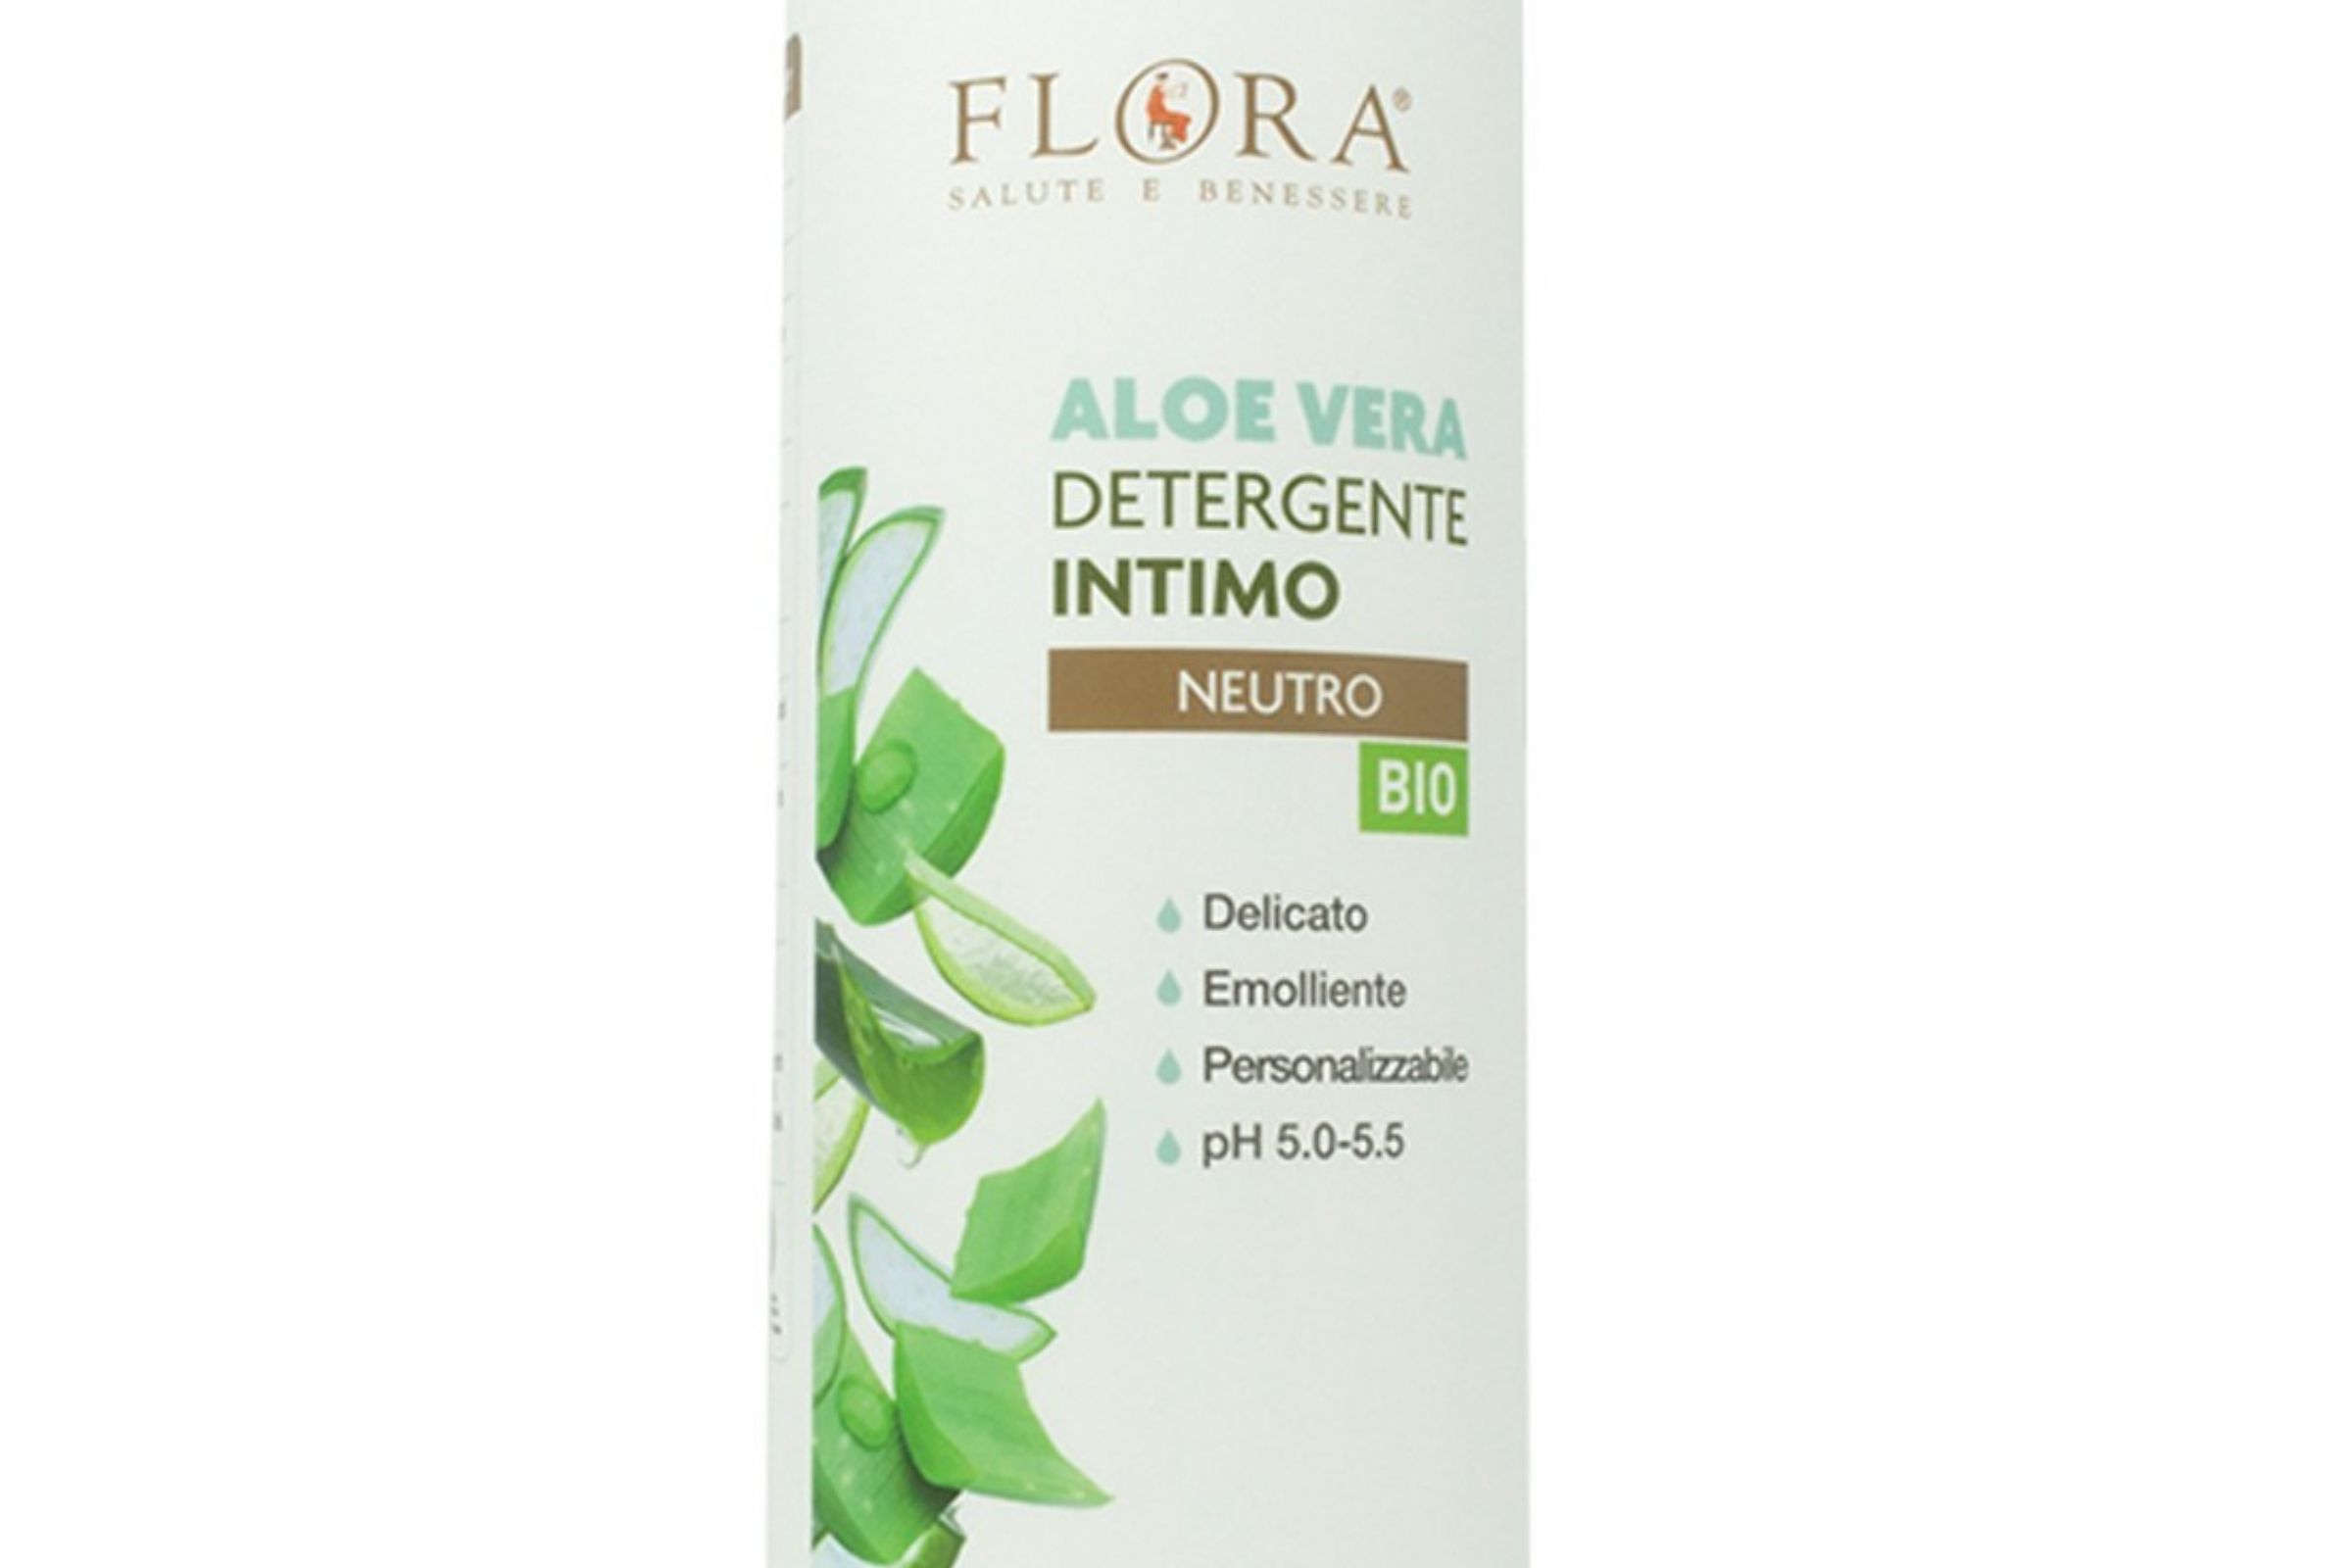 Detergente Intimo Aloe Vera, 1 lt